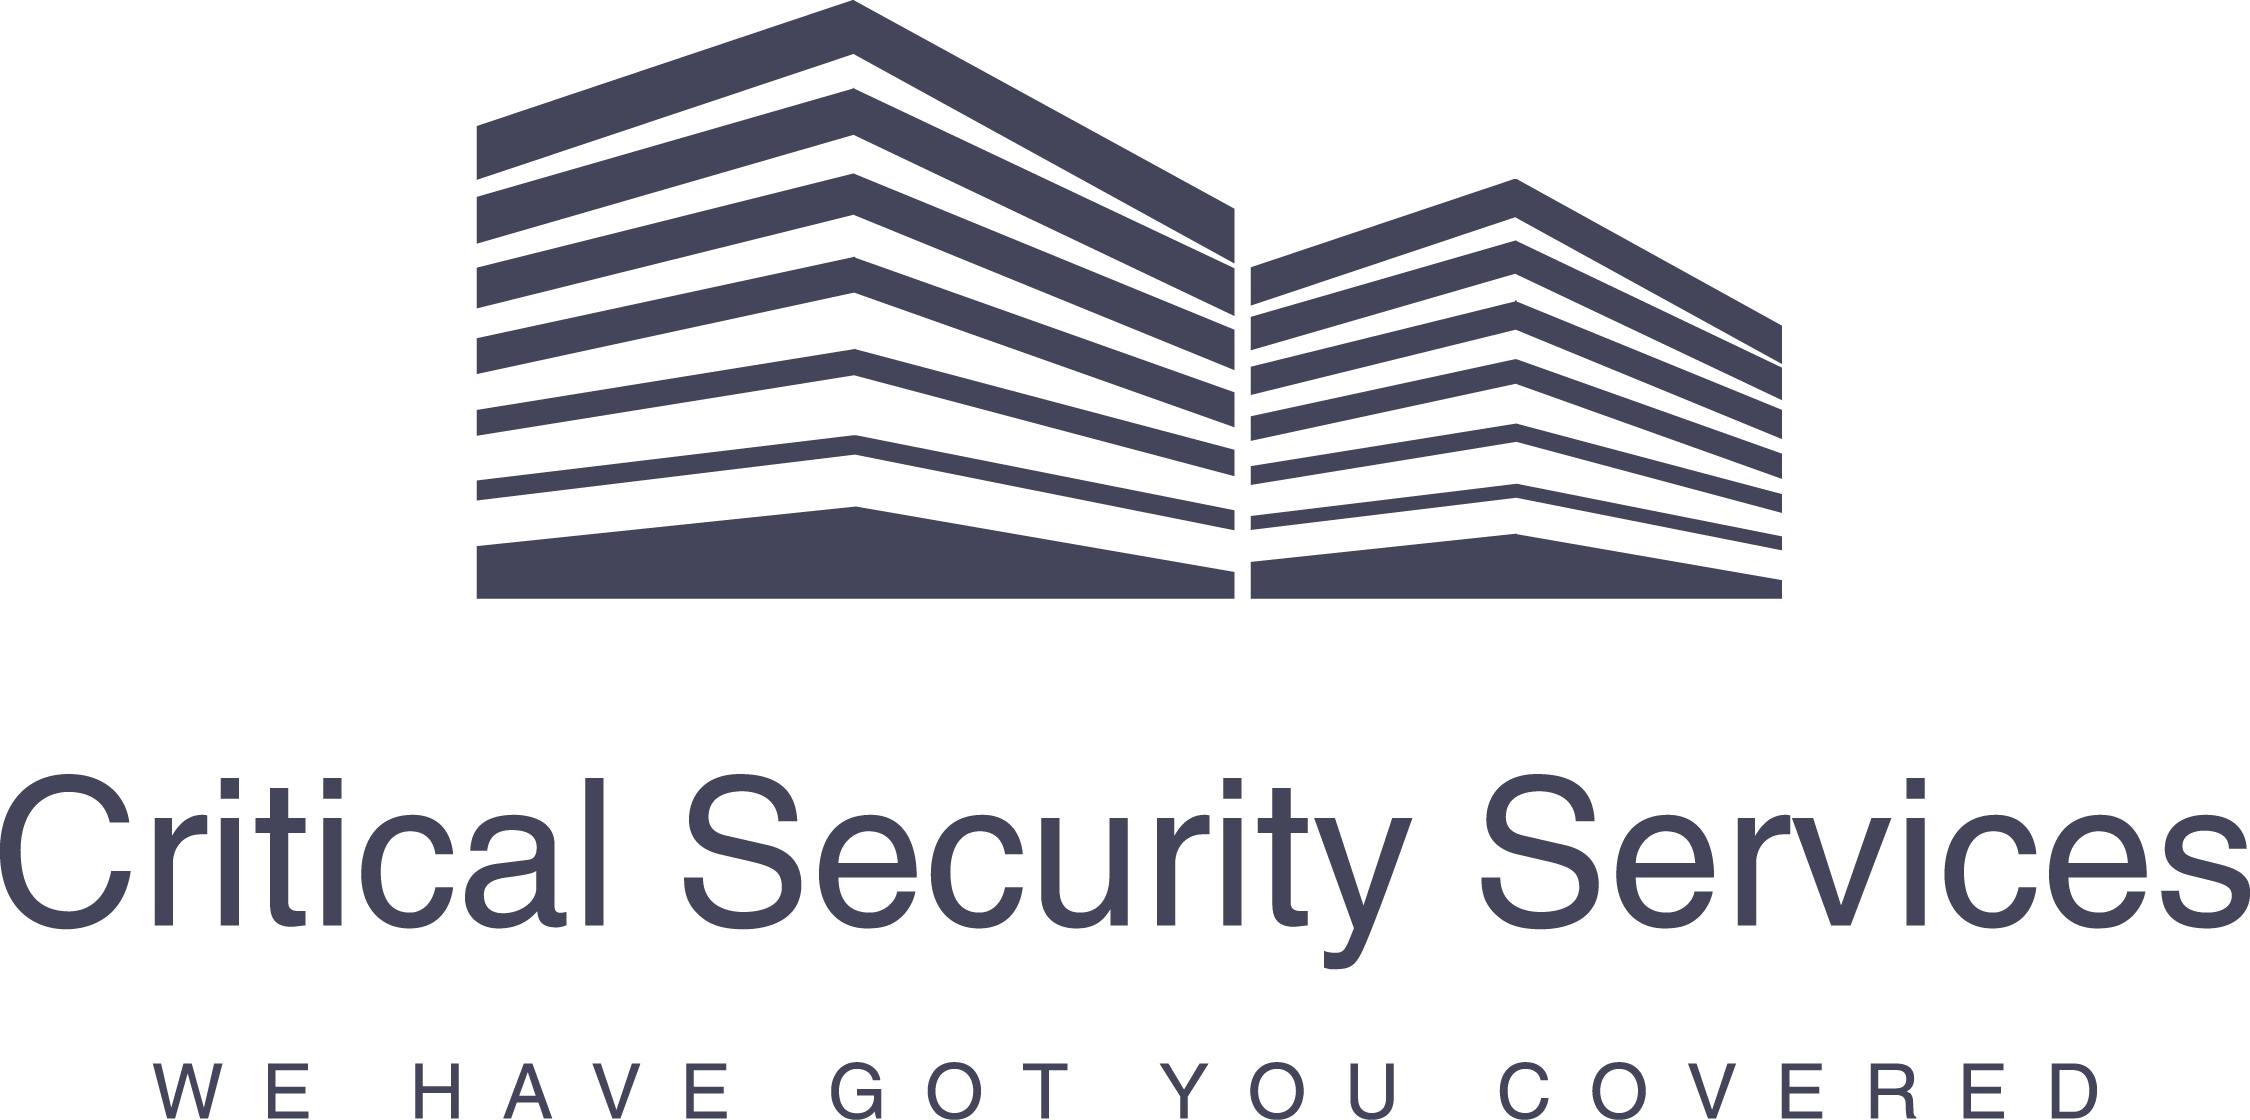 Critical Security Services